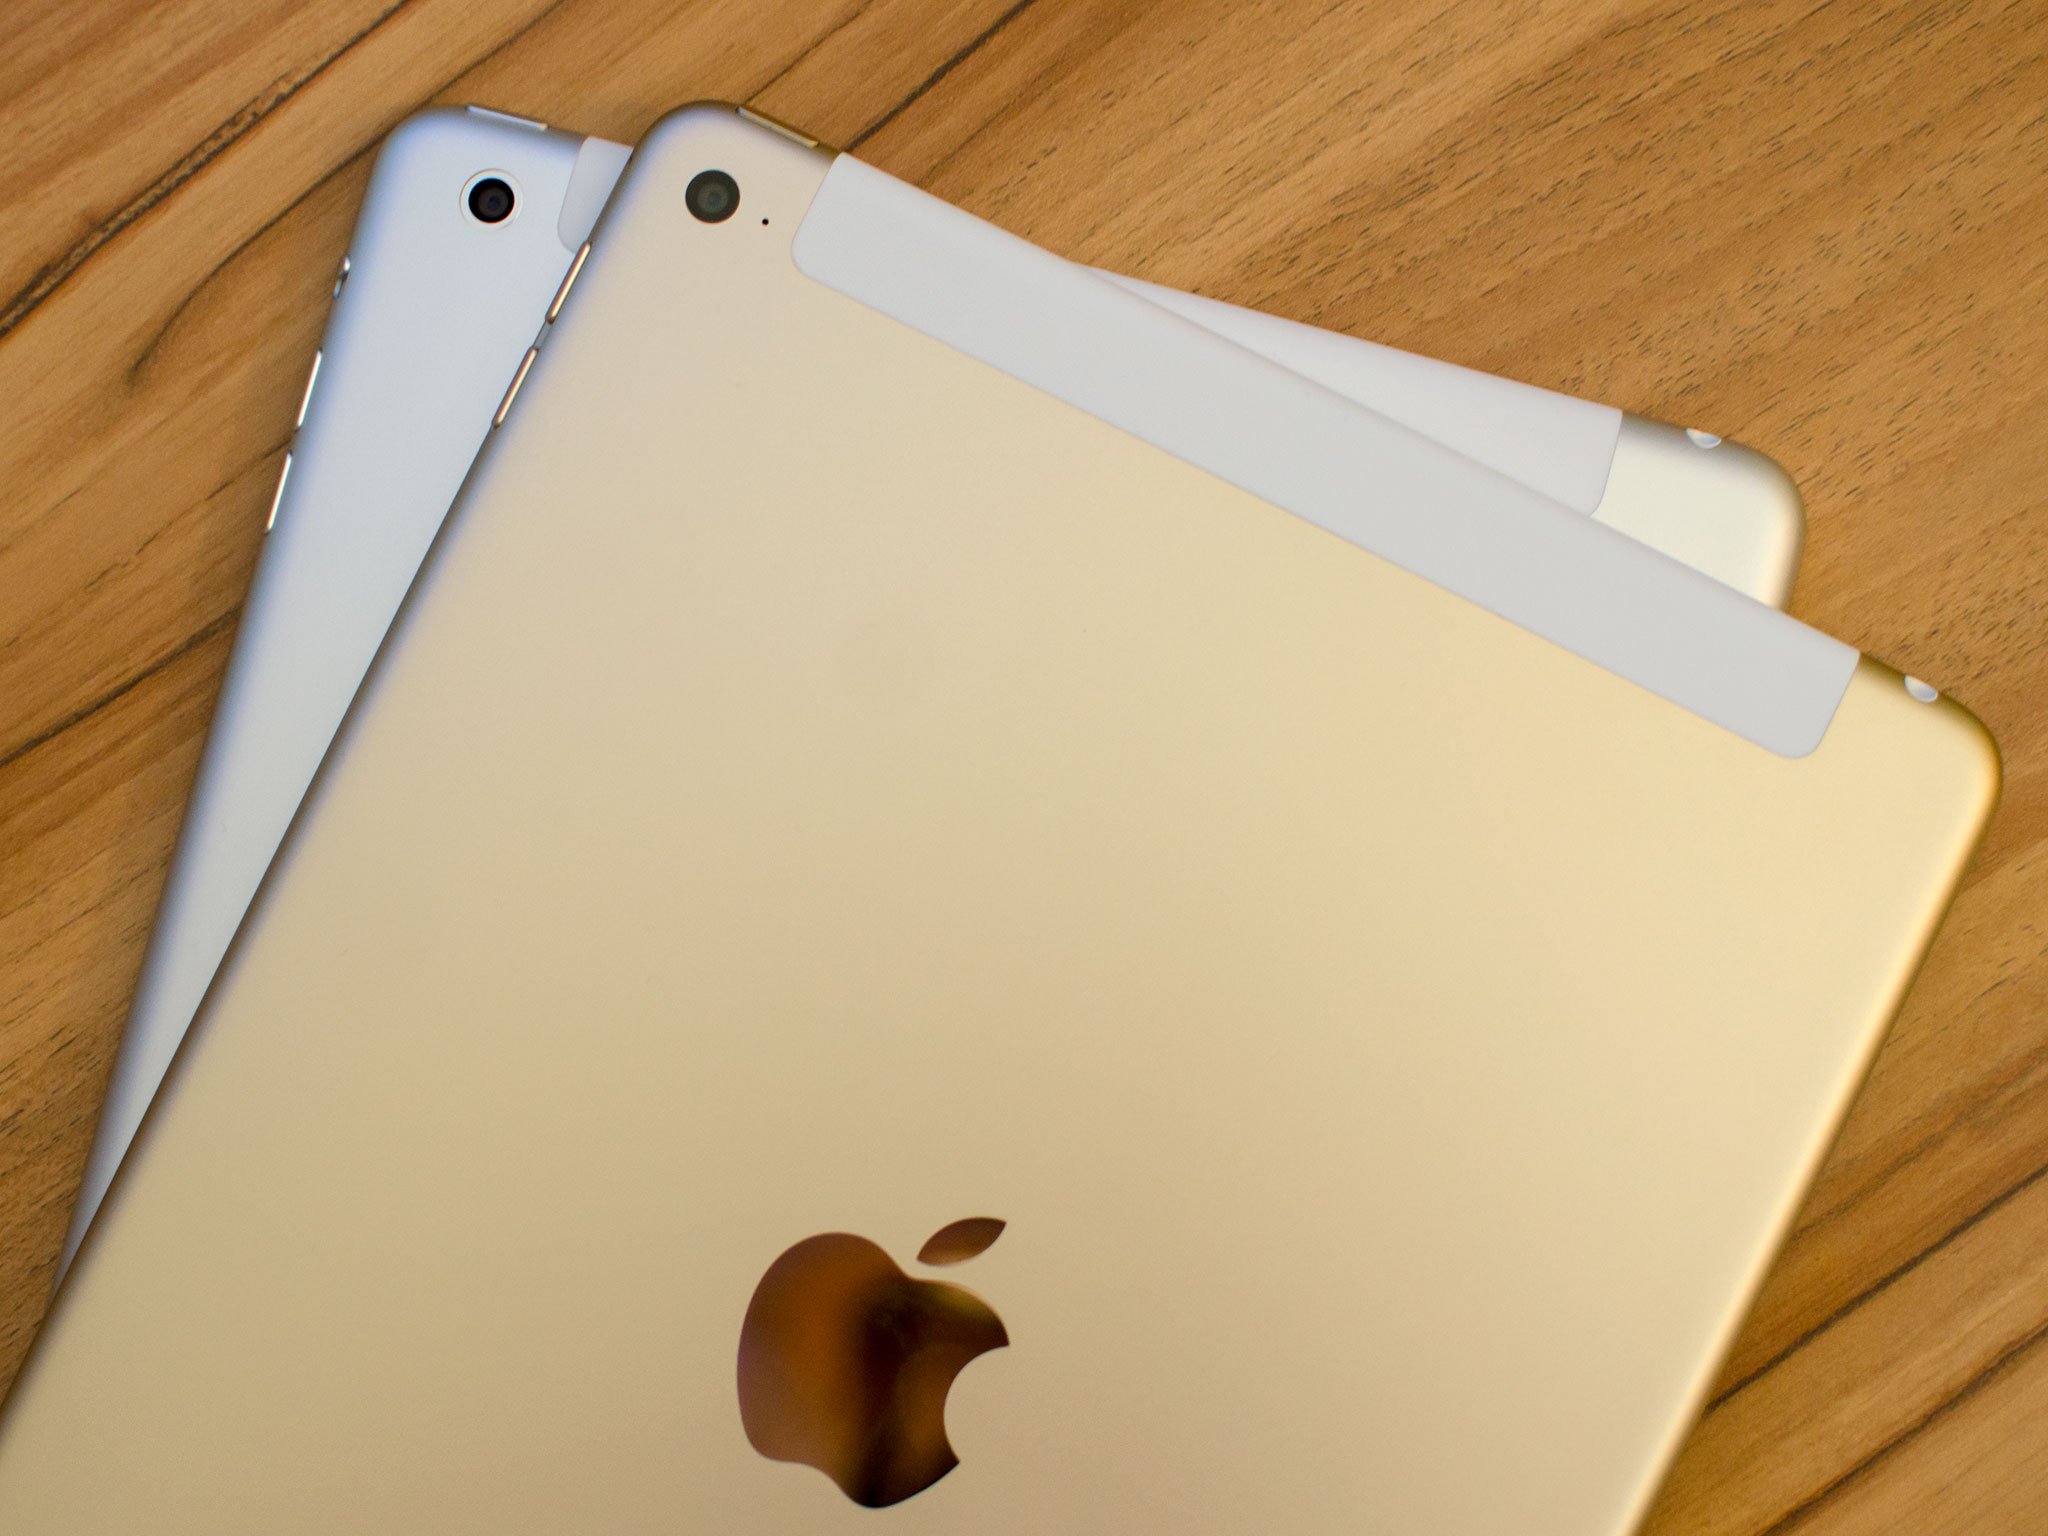 iPad Air 2 vs iPad Air camera comparison